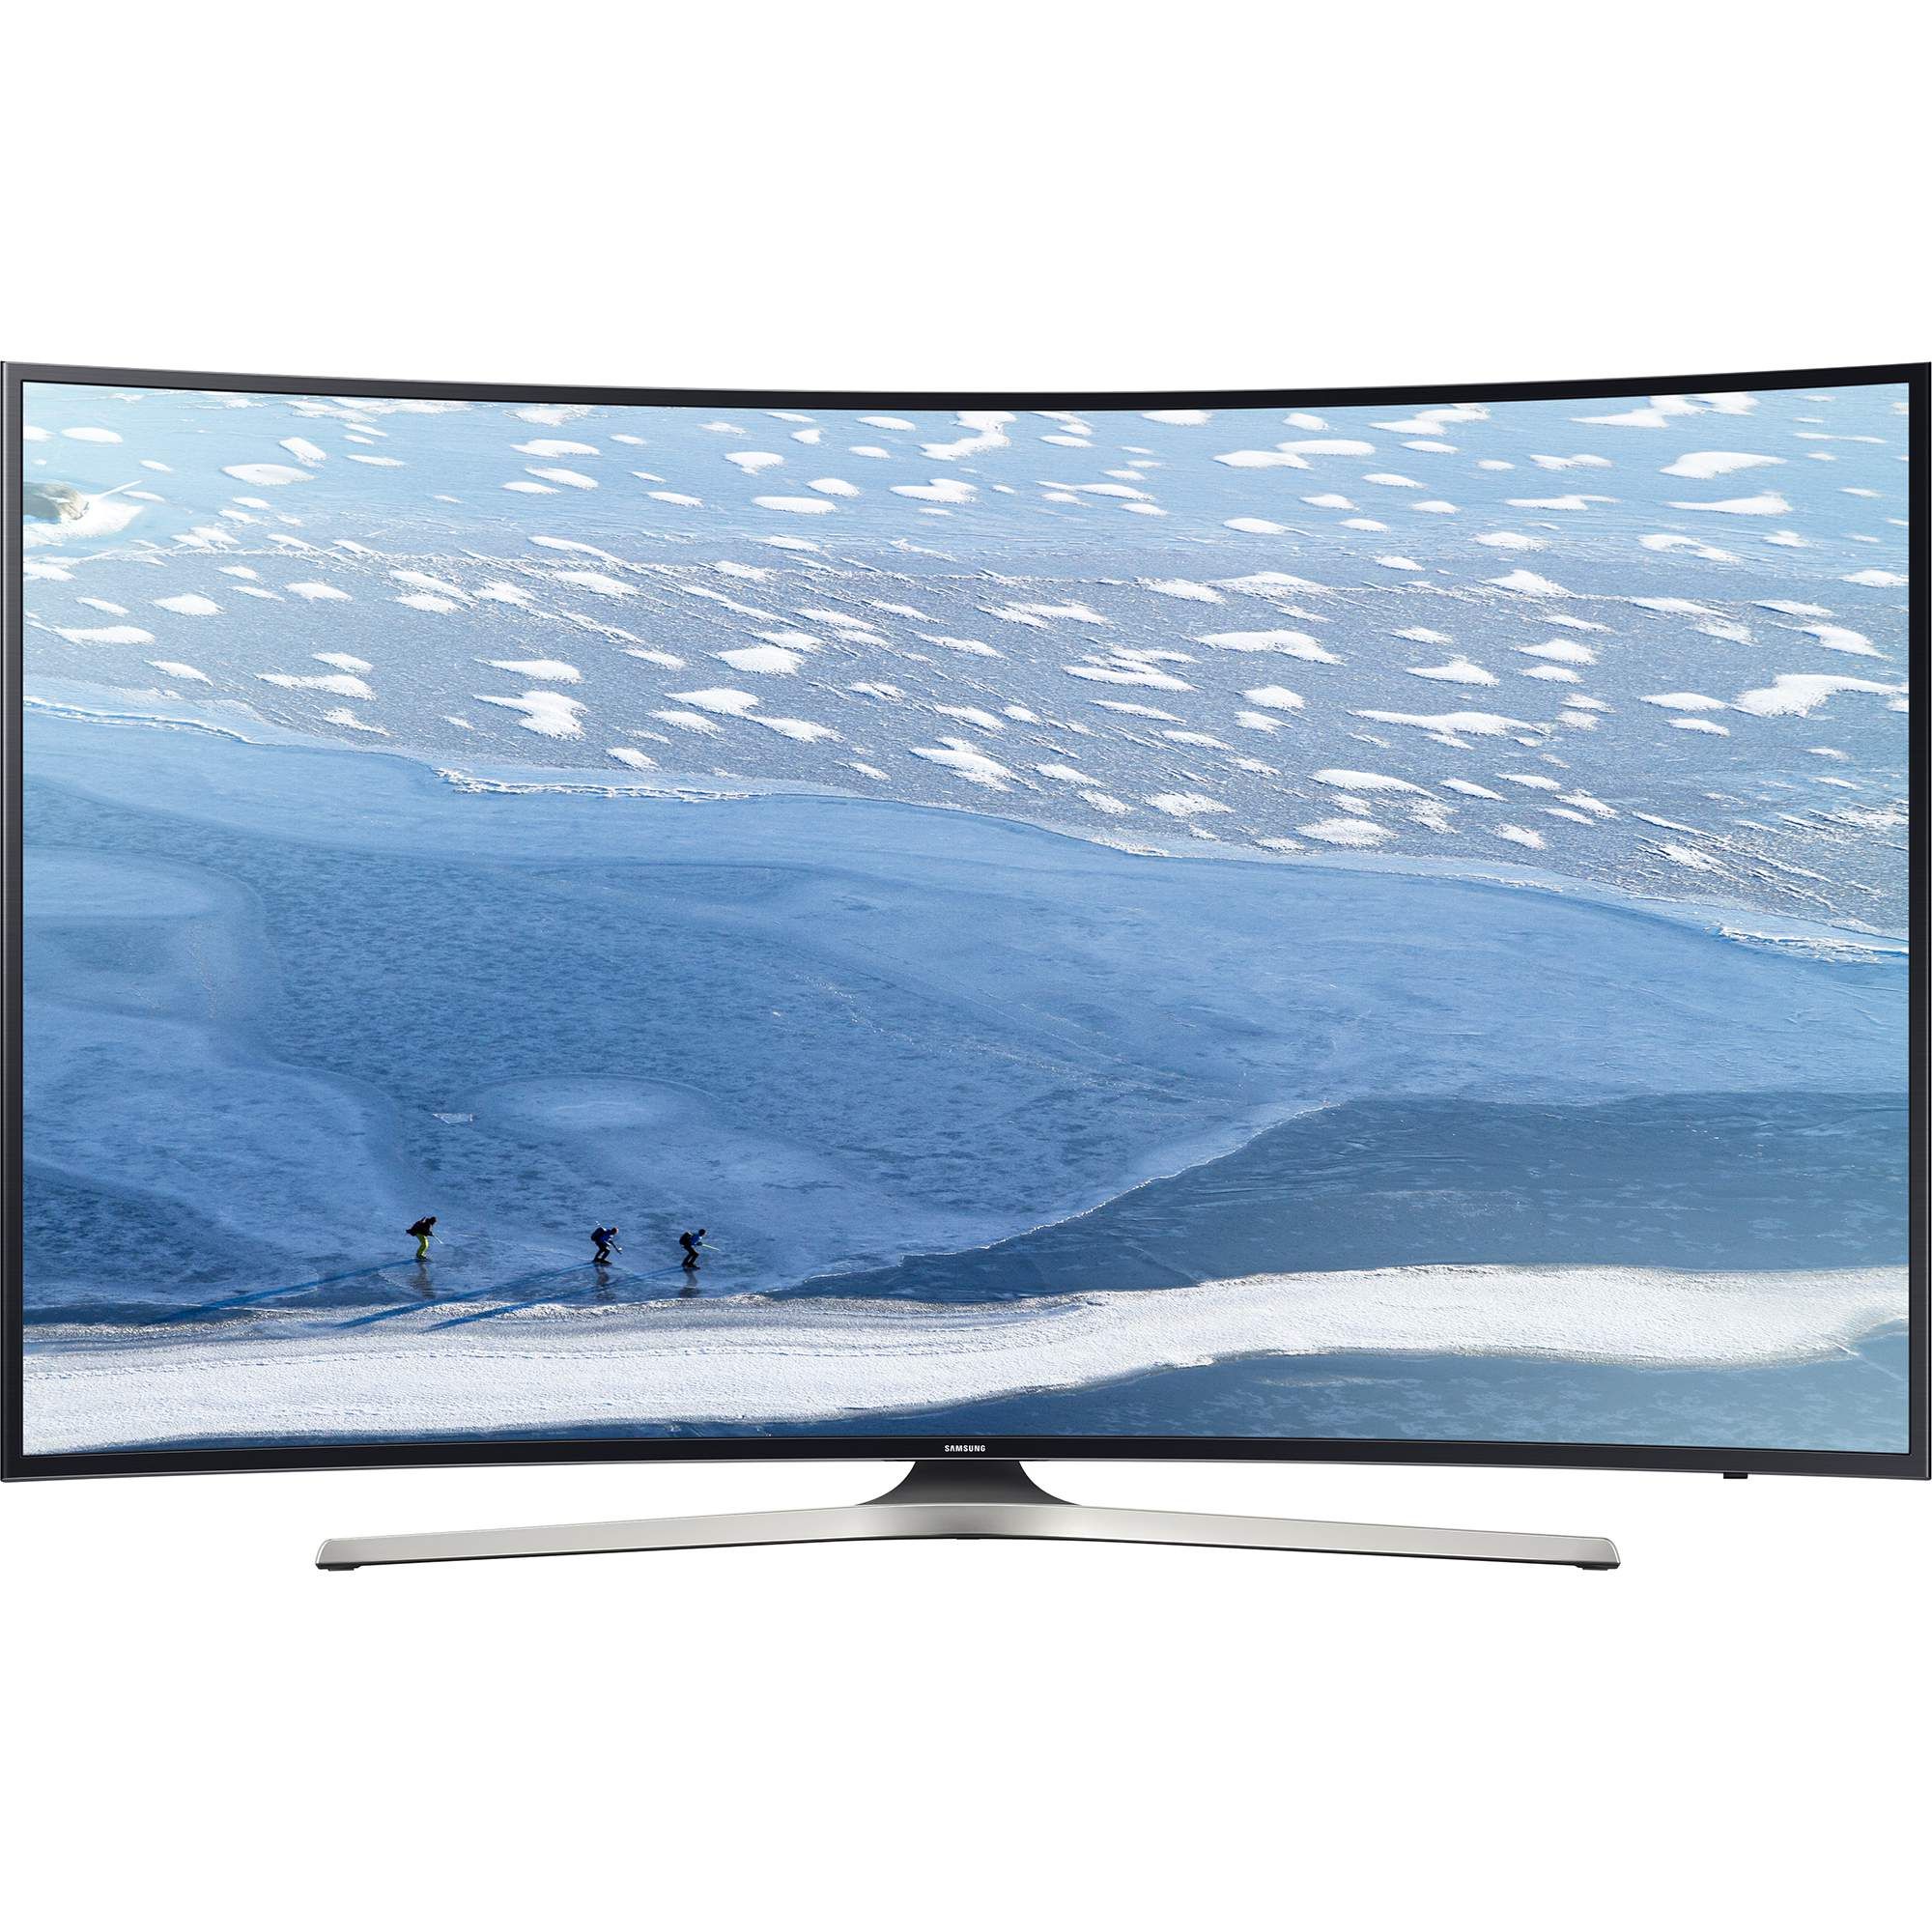  Televizor curbat, Smart LED, Samsung 55KU6172, 138 cm, Ultra HD 4K 